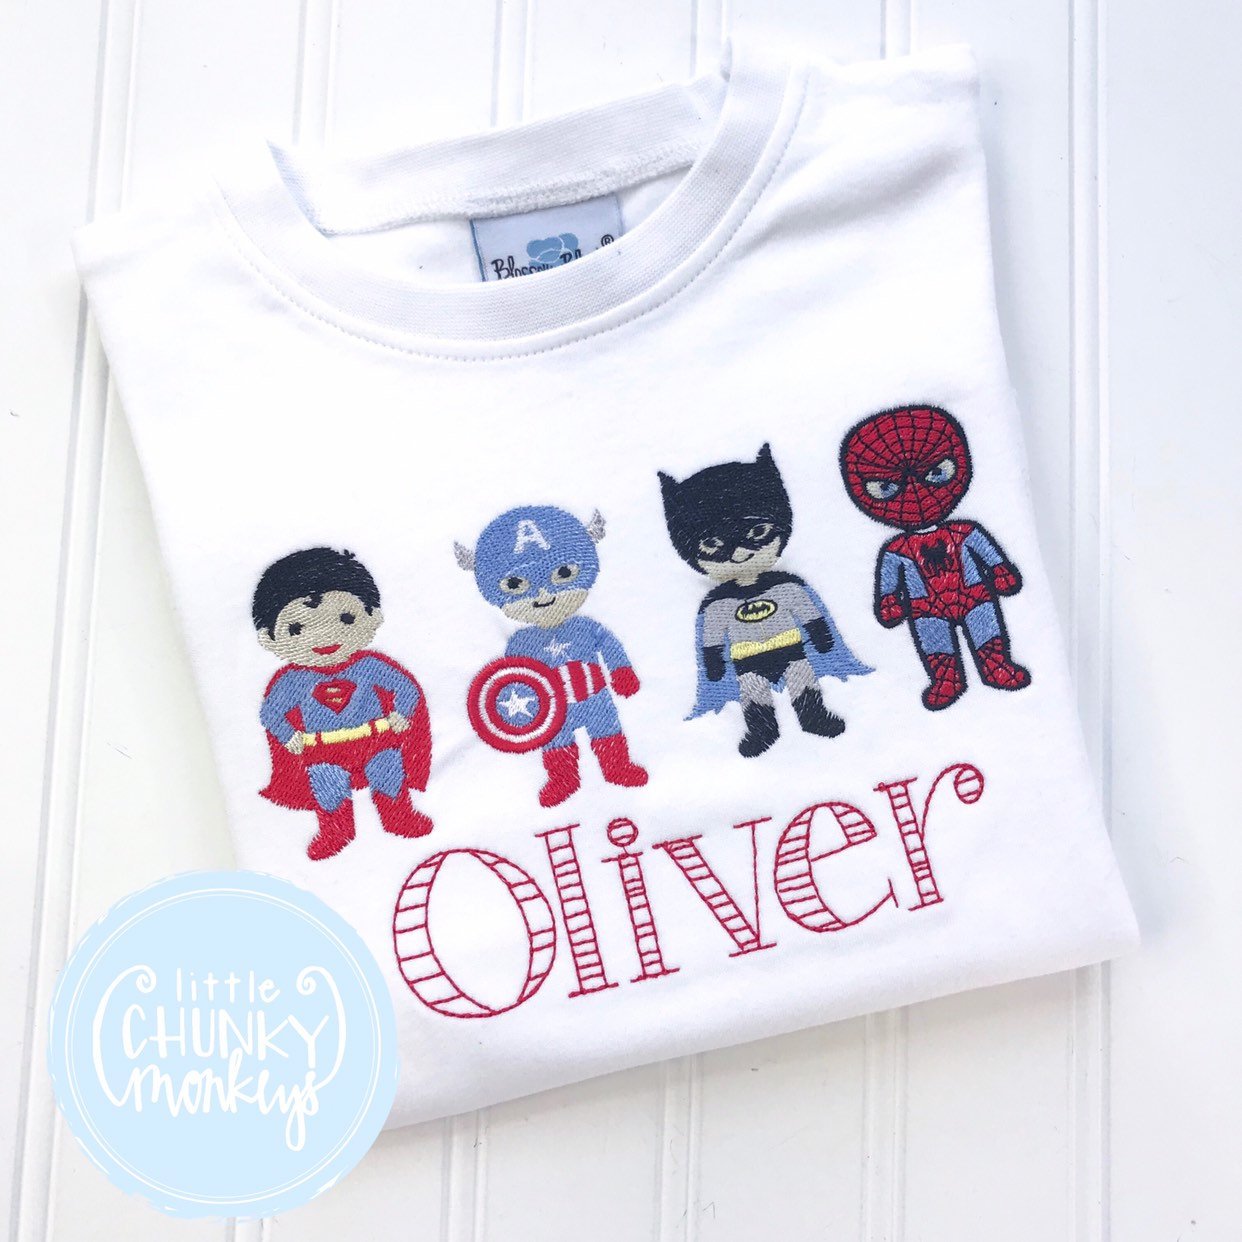 Boy Shirt - Boy Shirt - Stitched Superhero Shirt